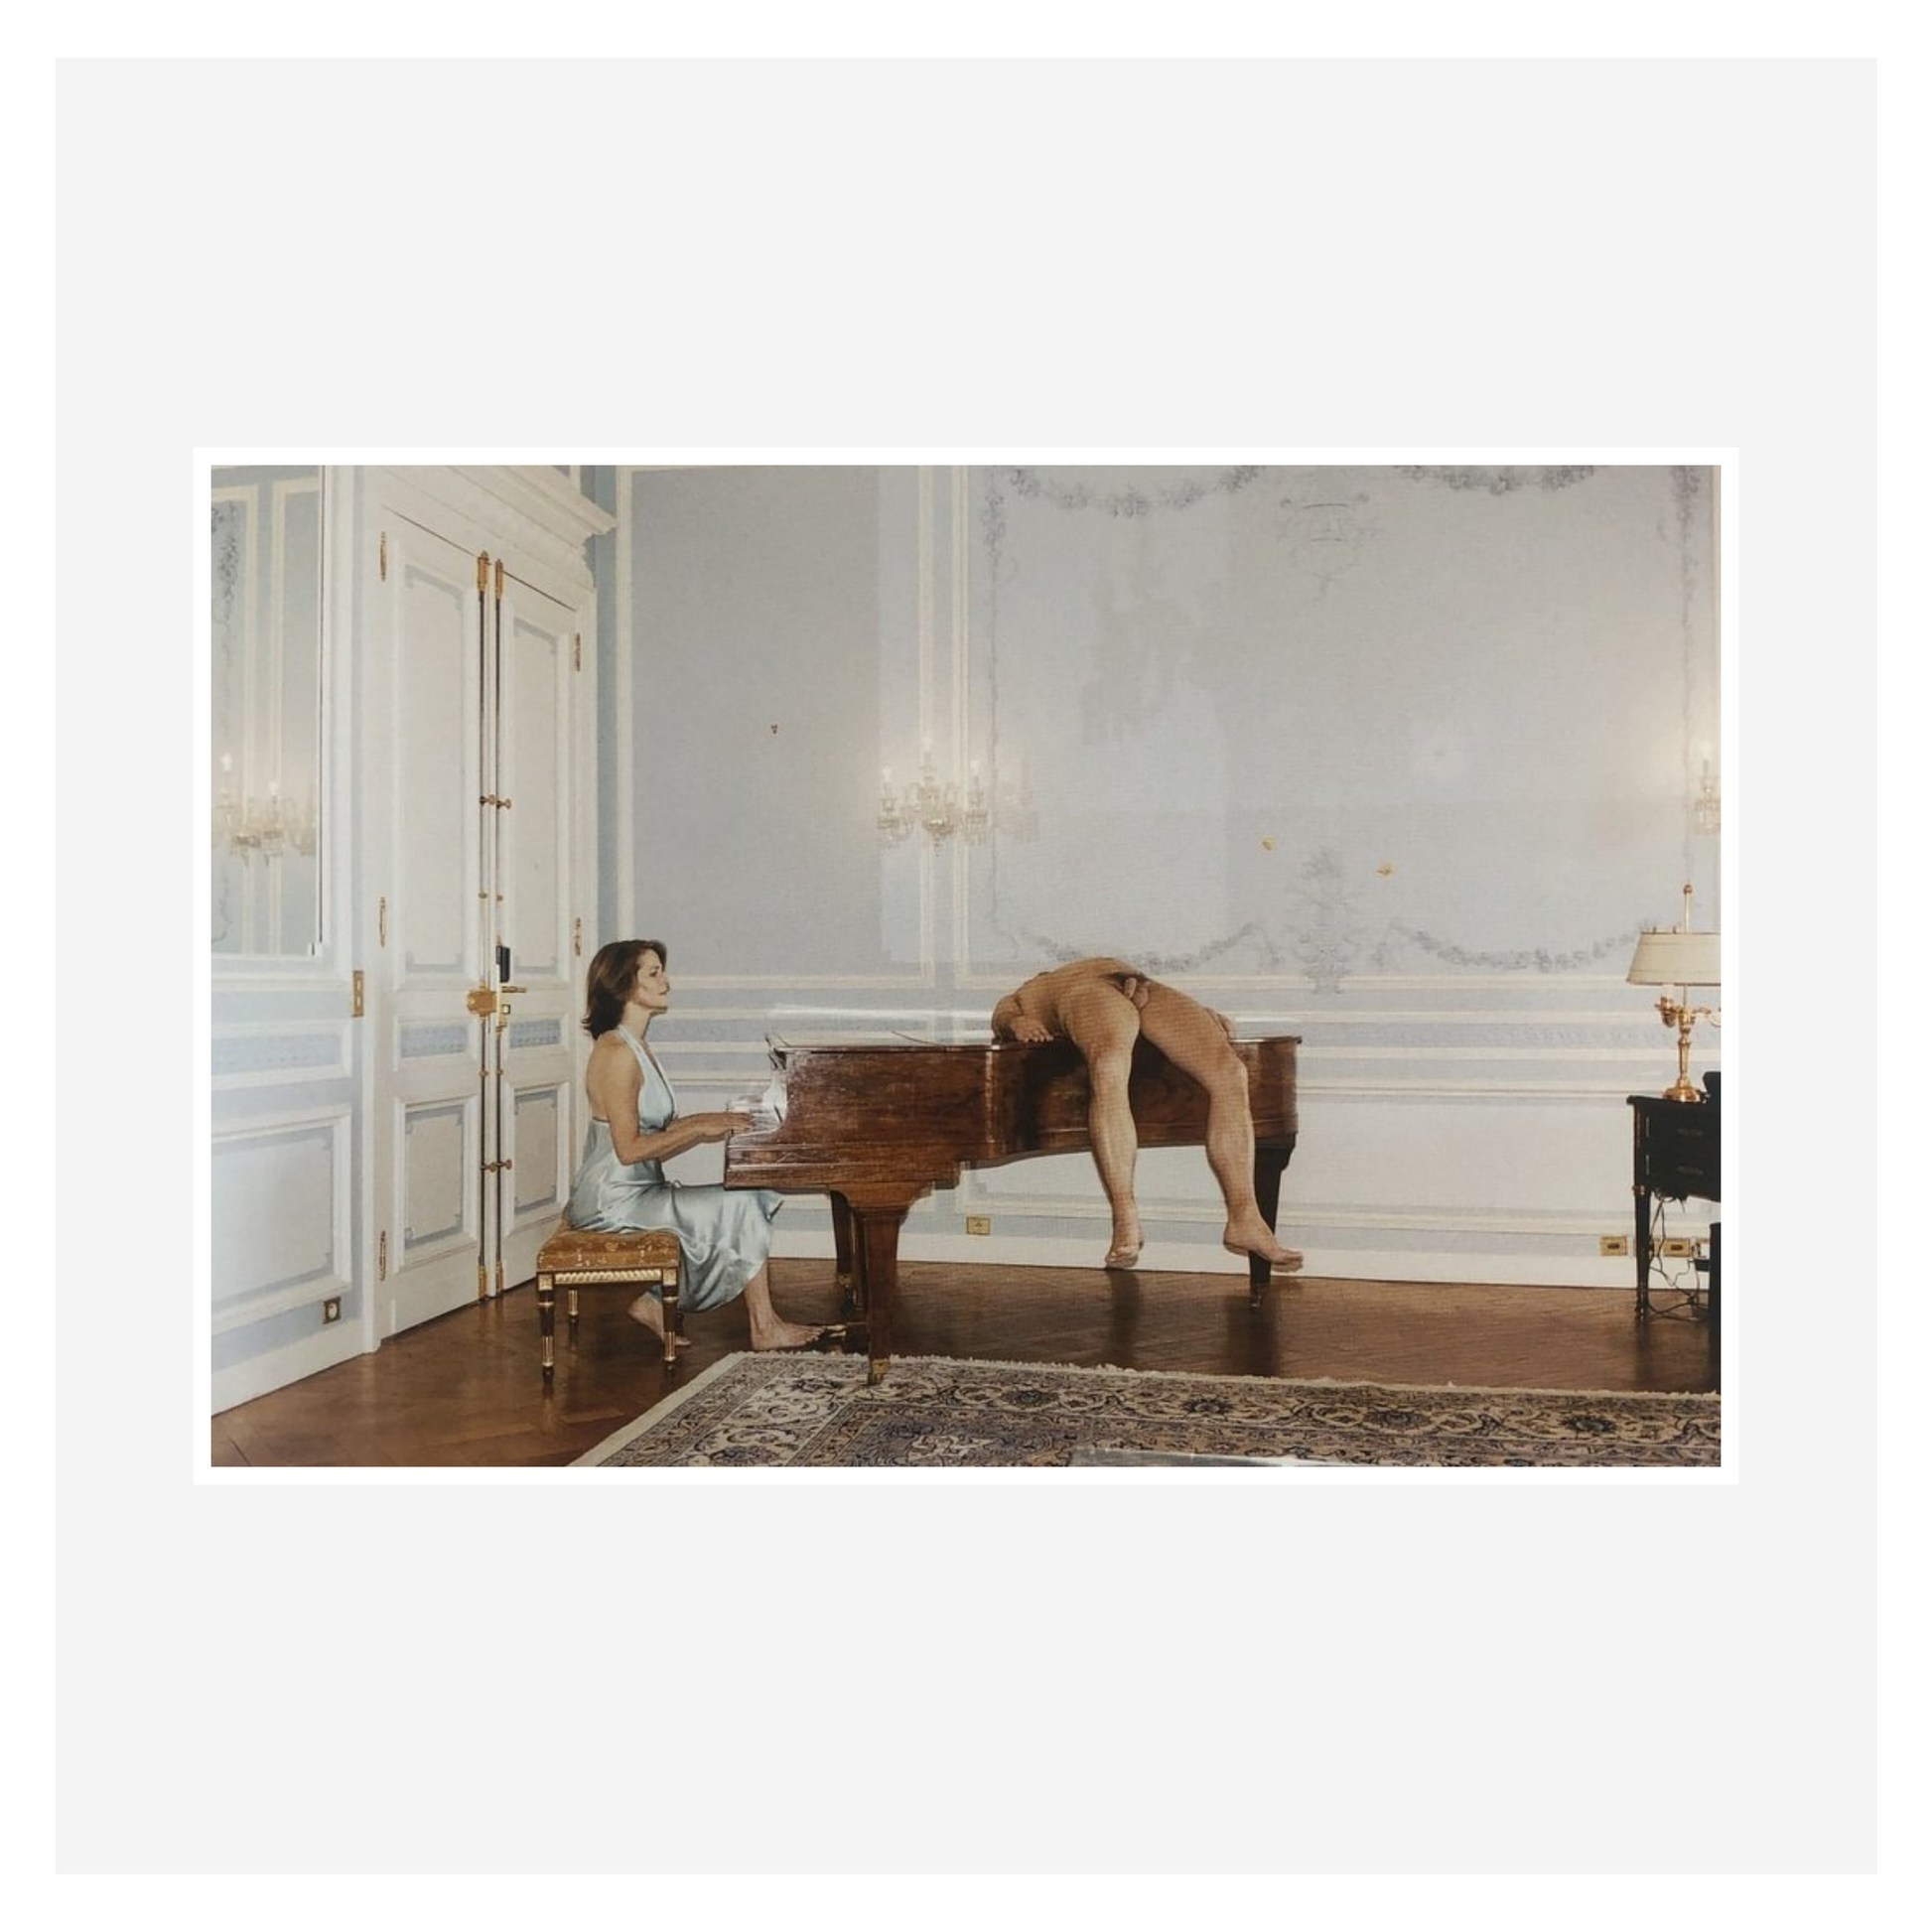 “Louis XV” by Juergen Teller